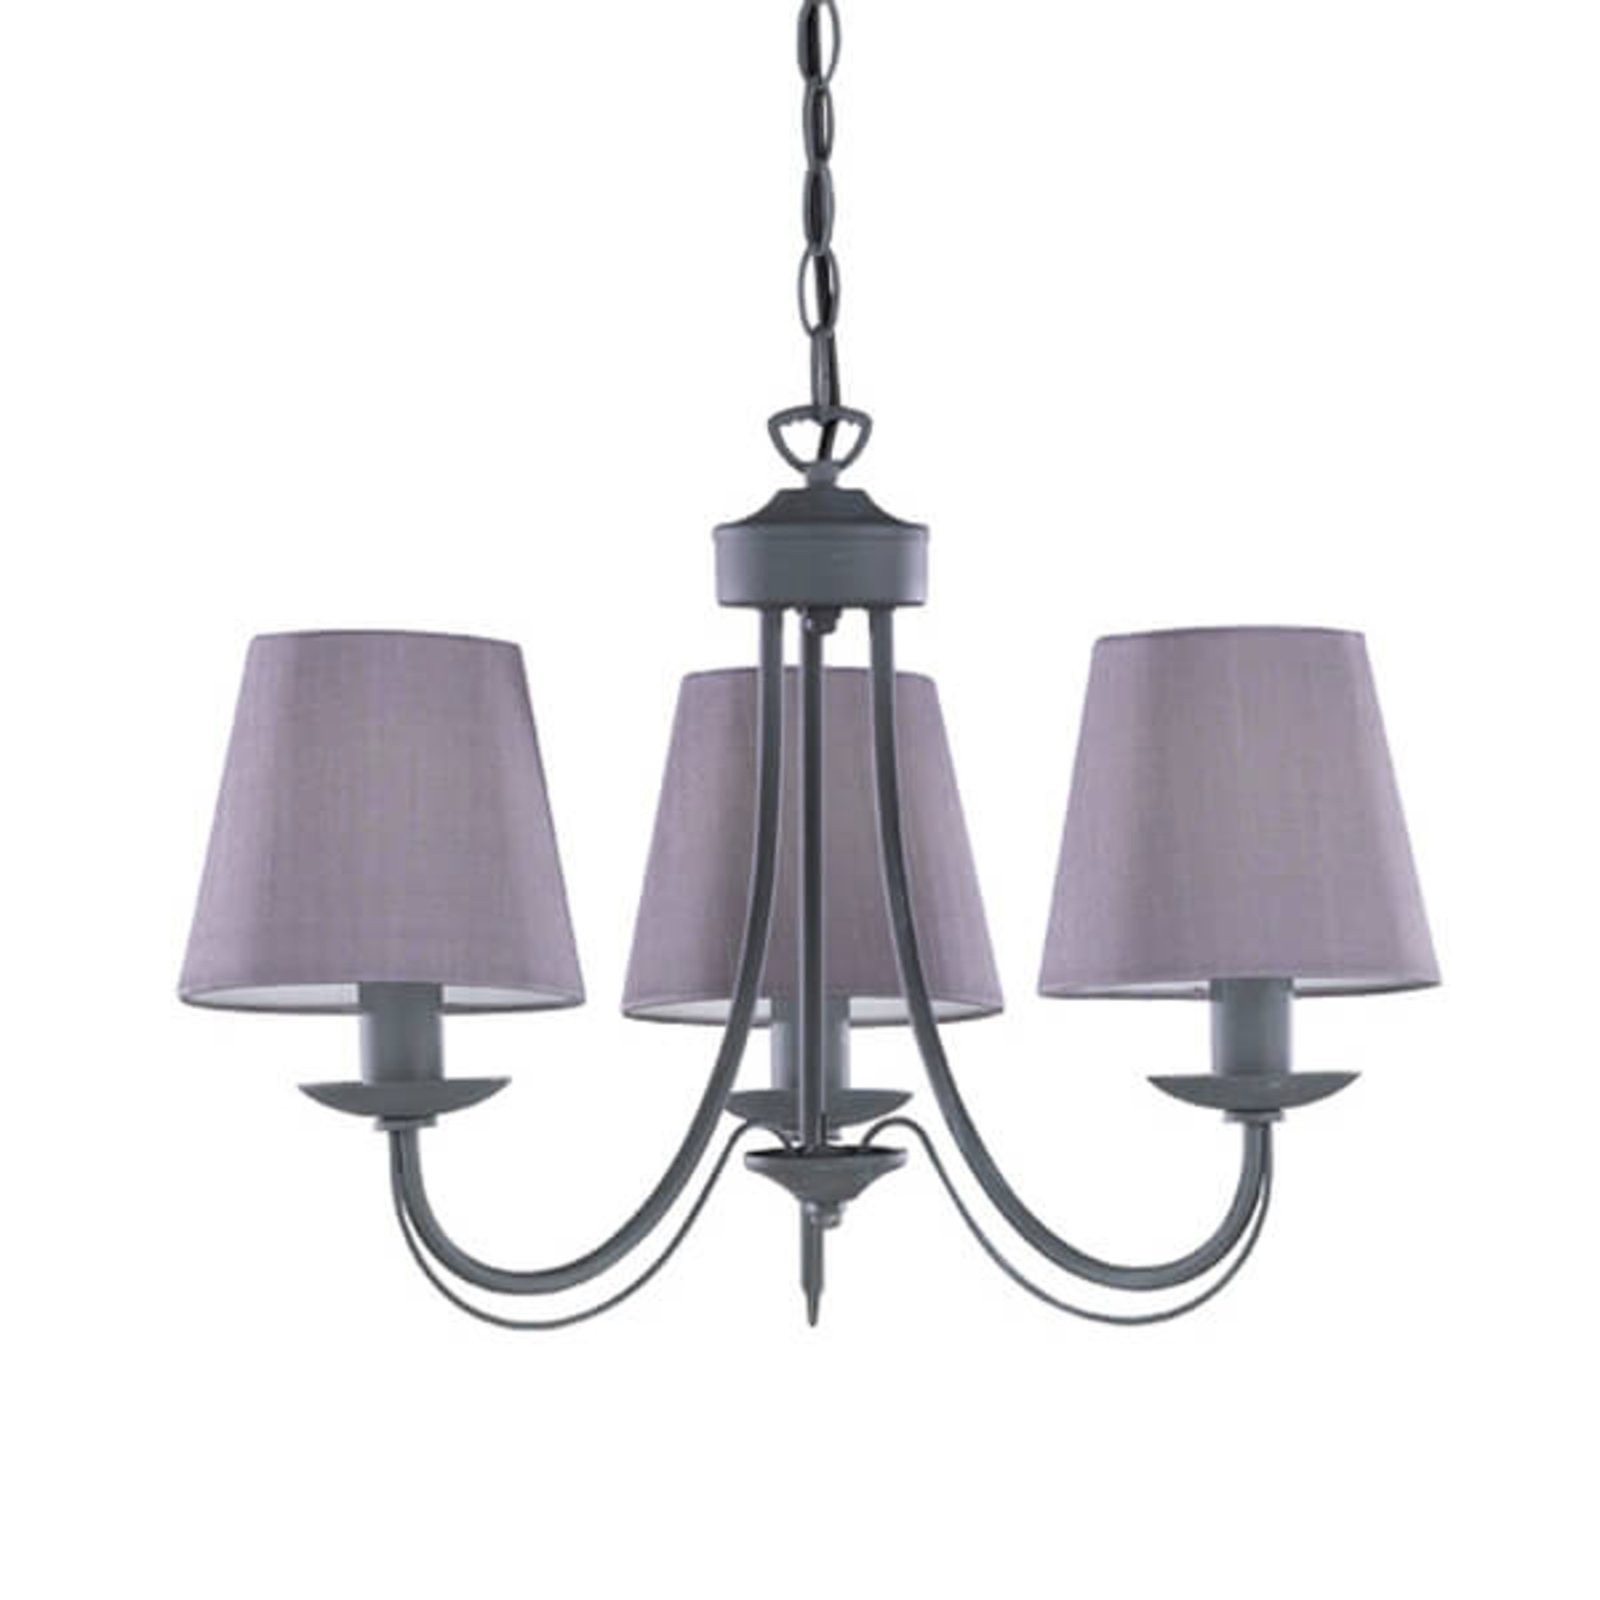 Cortez chandelier, grey, 3-bulb